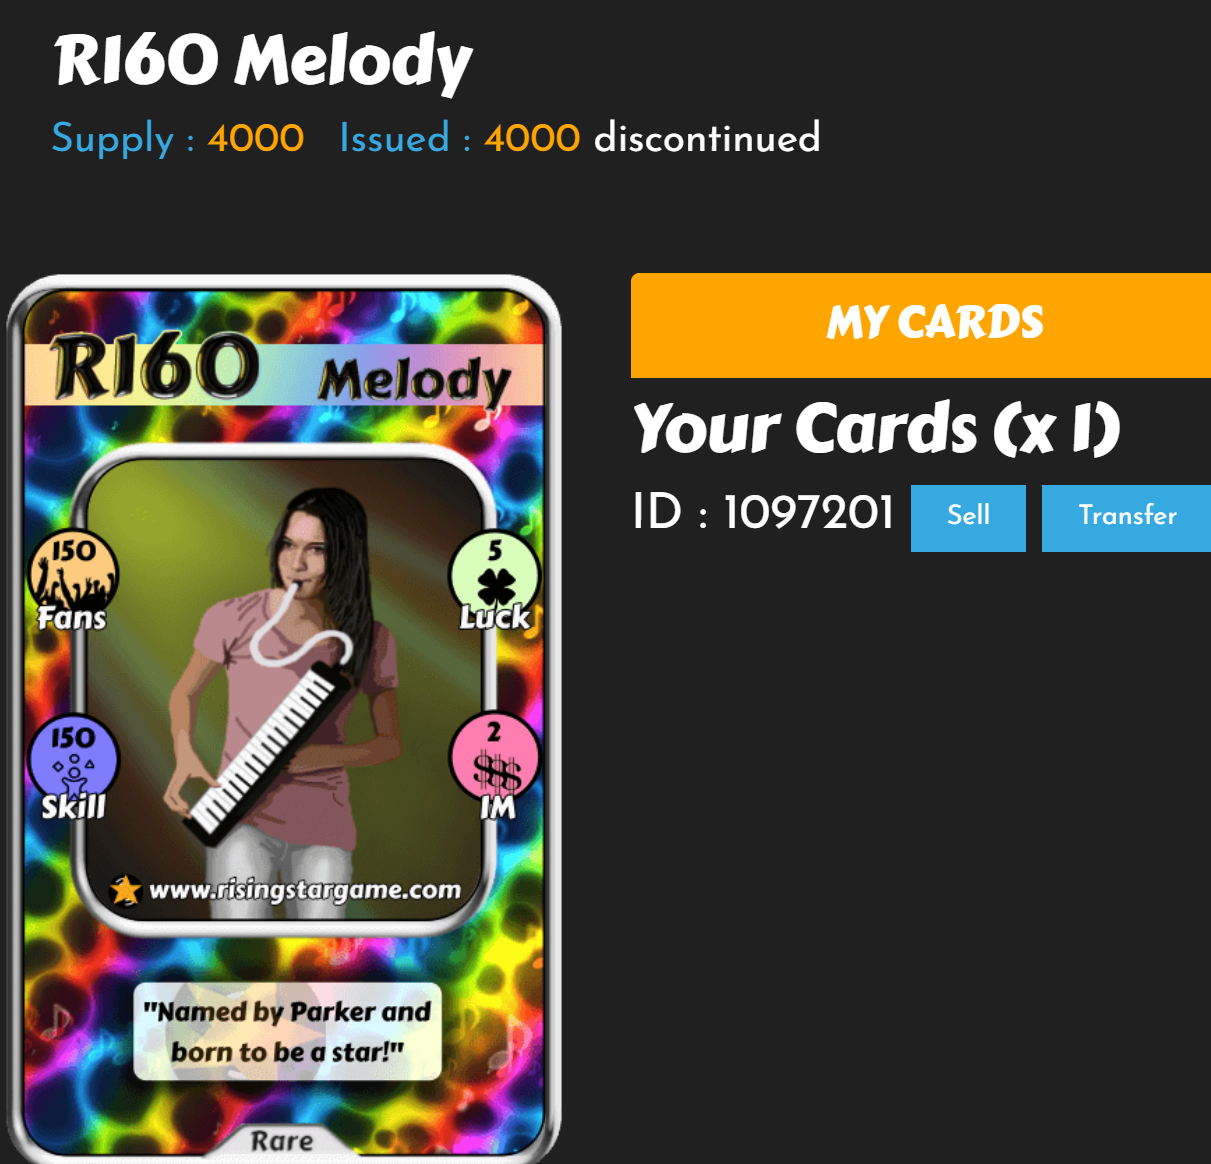 R160 Melody/A Rare Musician